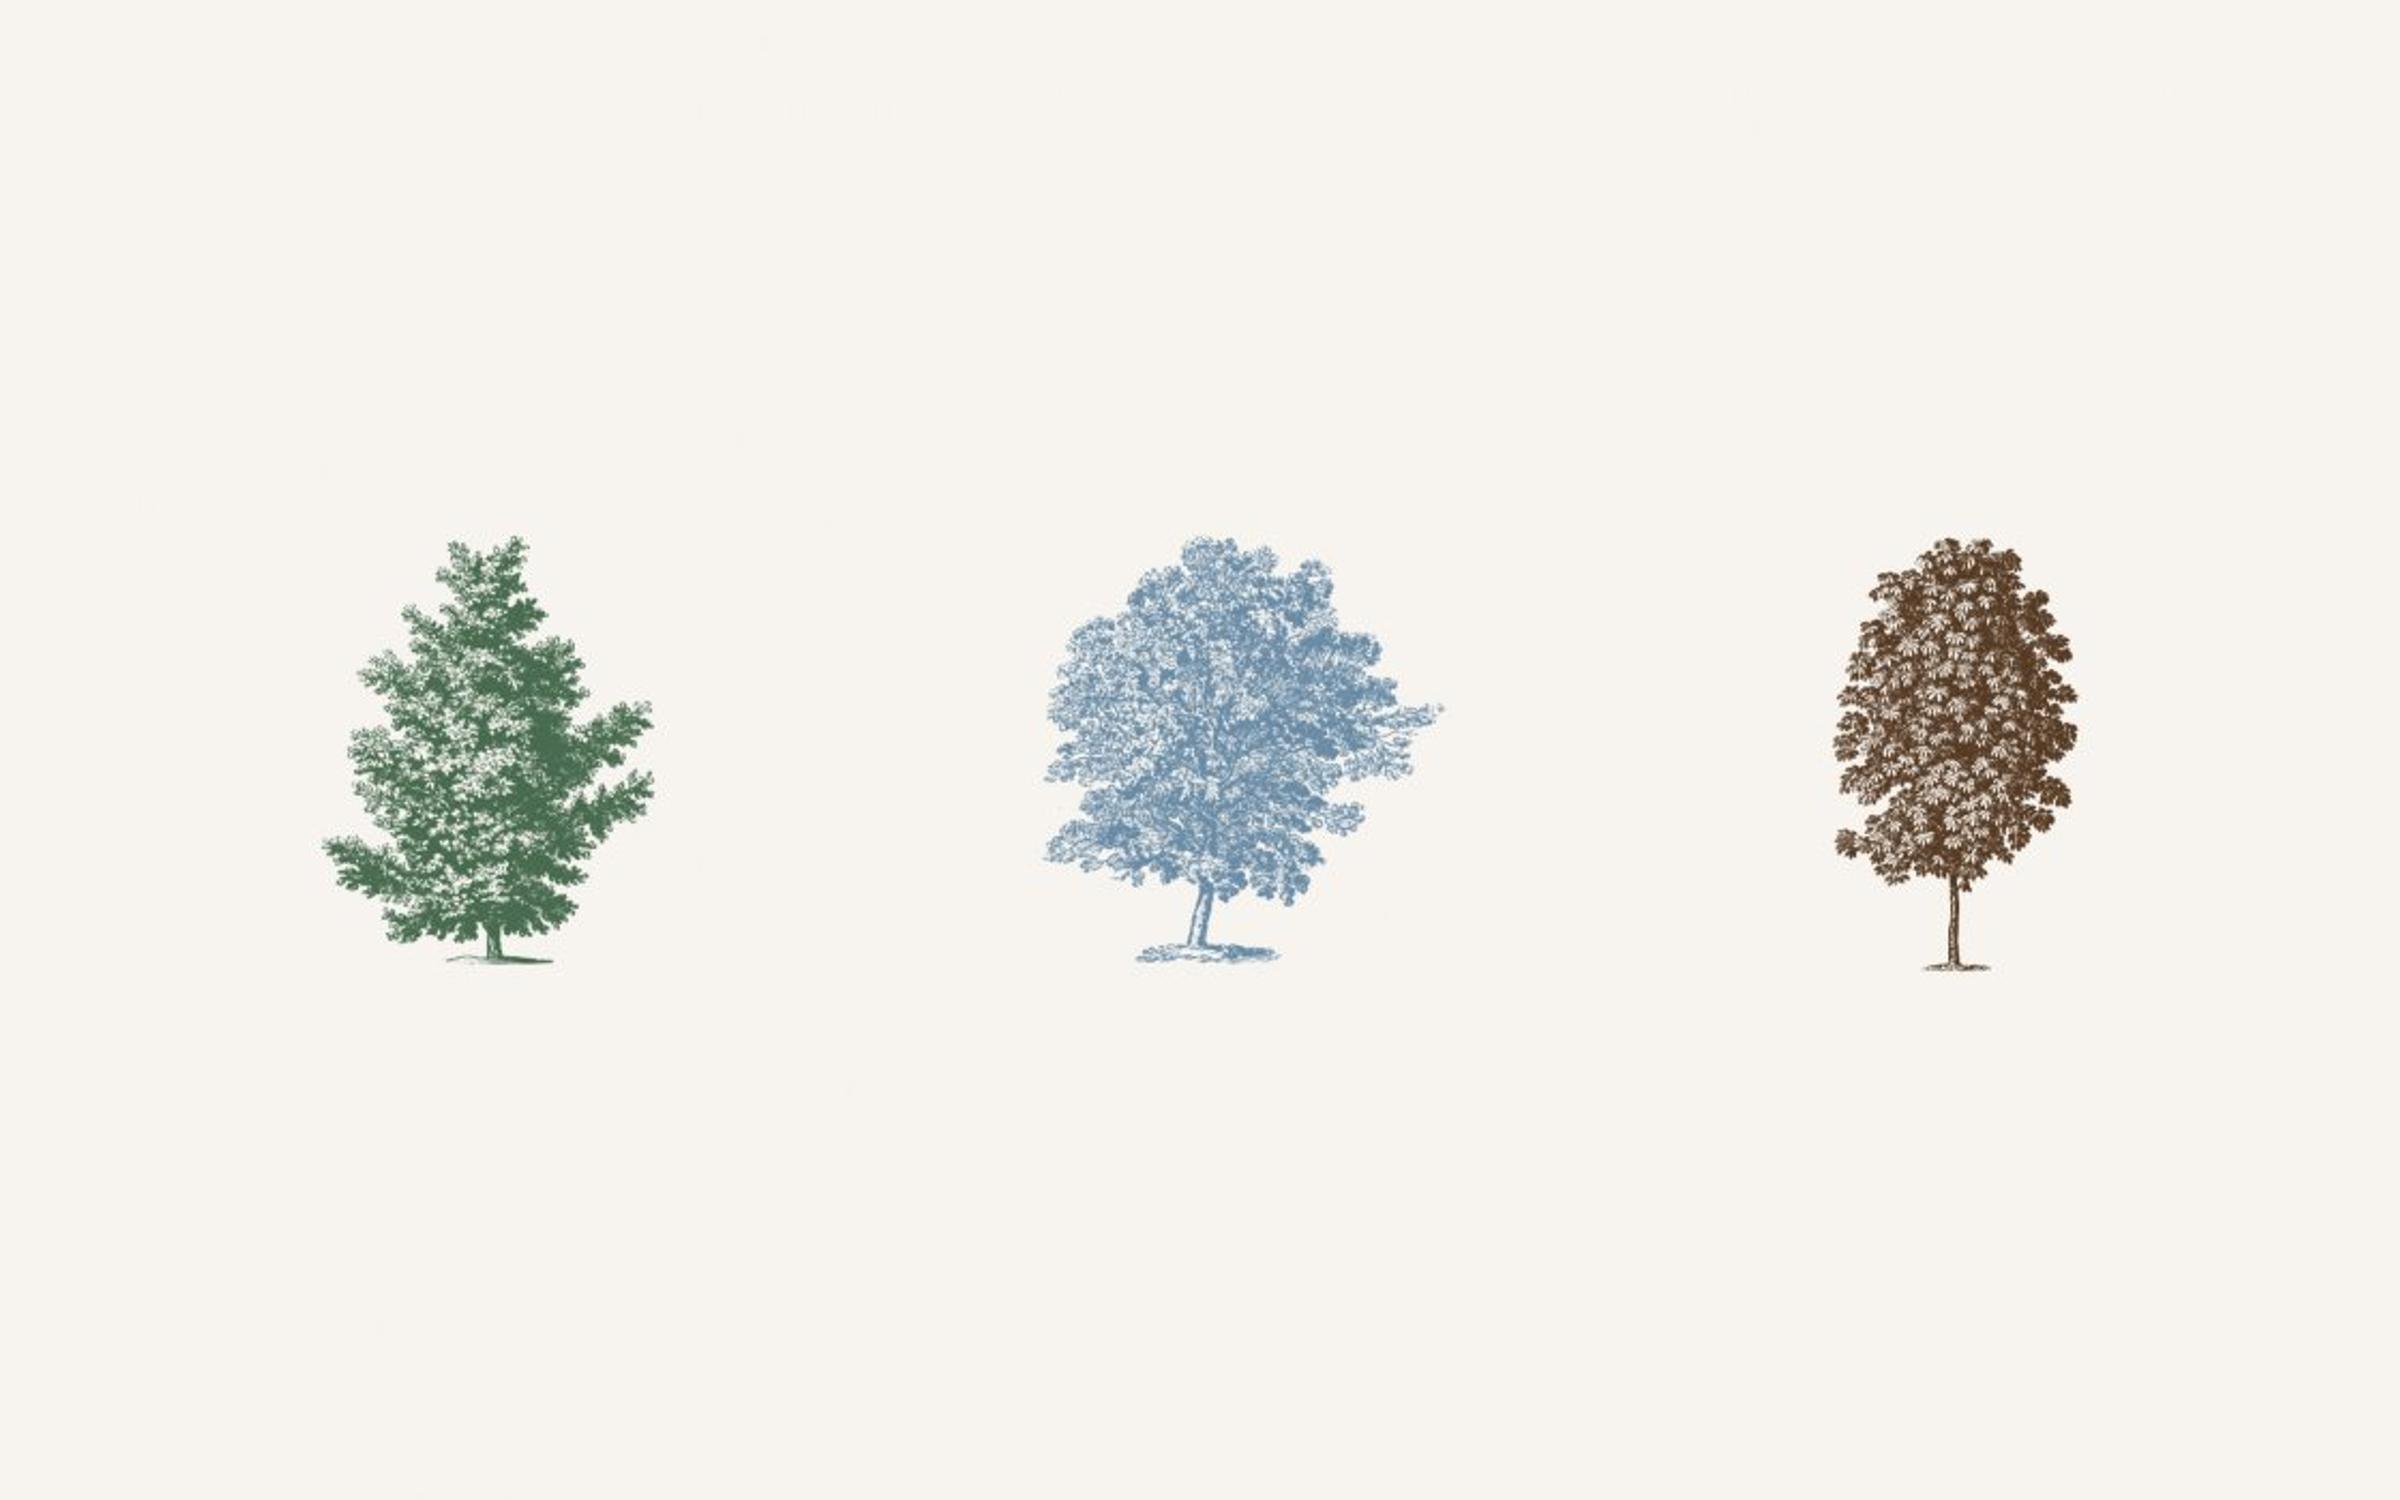 Trees provide long-term ecosystem benefits